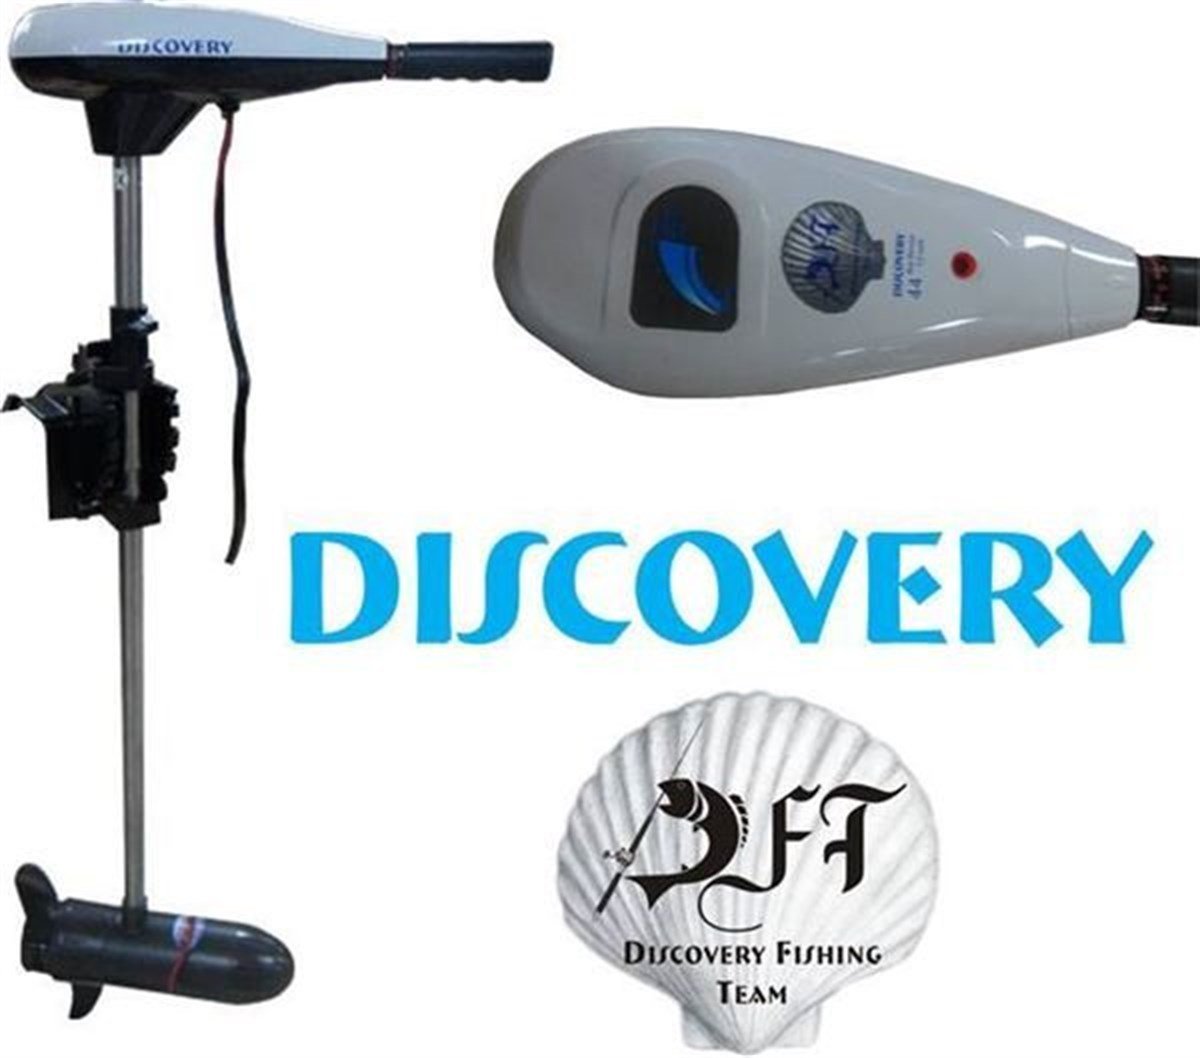 DISCOVERY 44 LBS Elektrikli Bot Motoru ve Discovery Ürünler